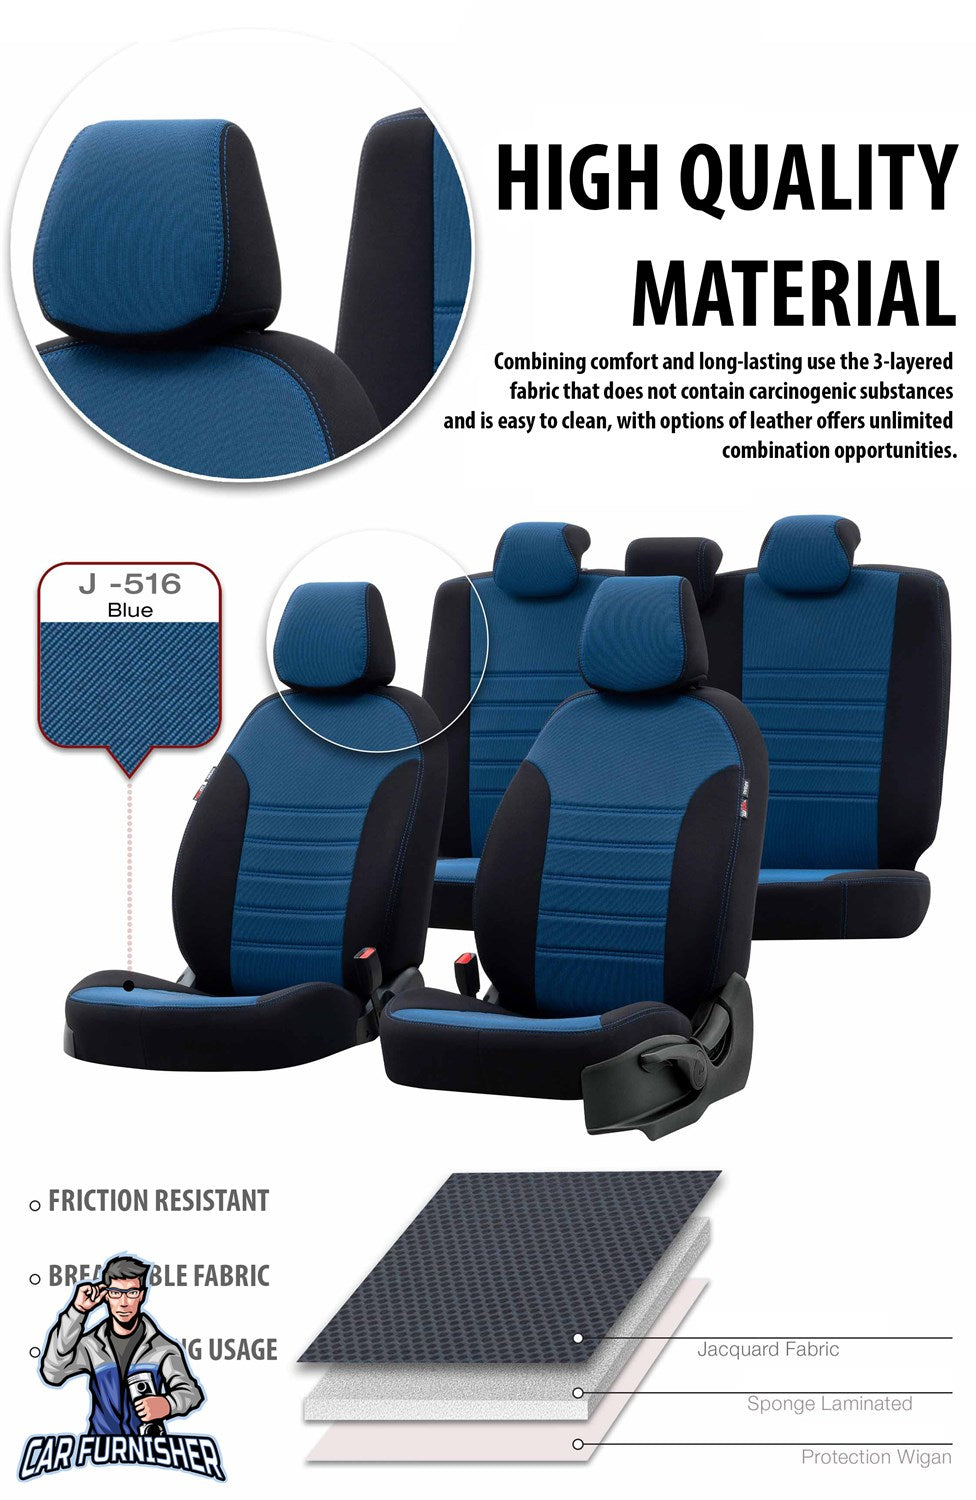 Fiat Marea Seat Covers Original Jacquard Design Smoked Black Jacquard Fabric